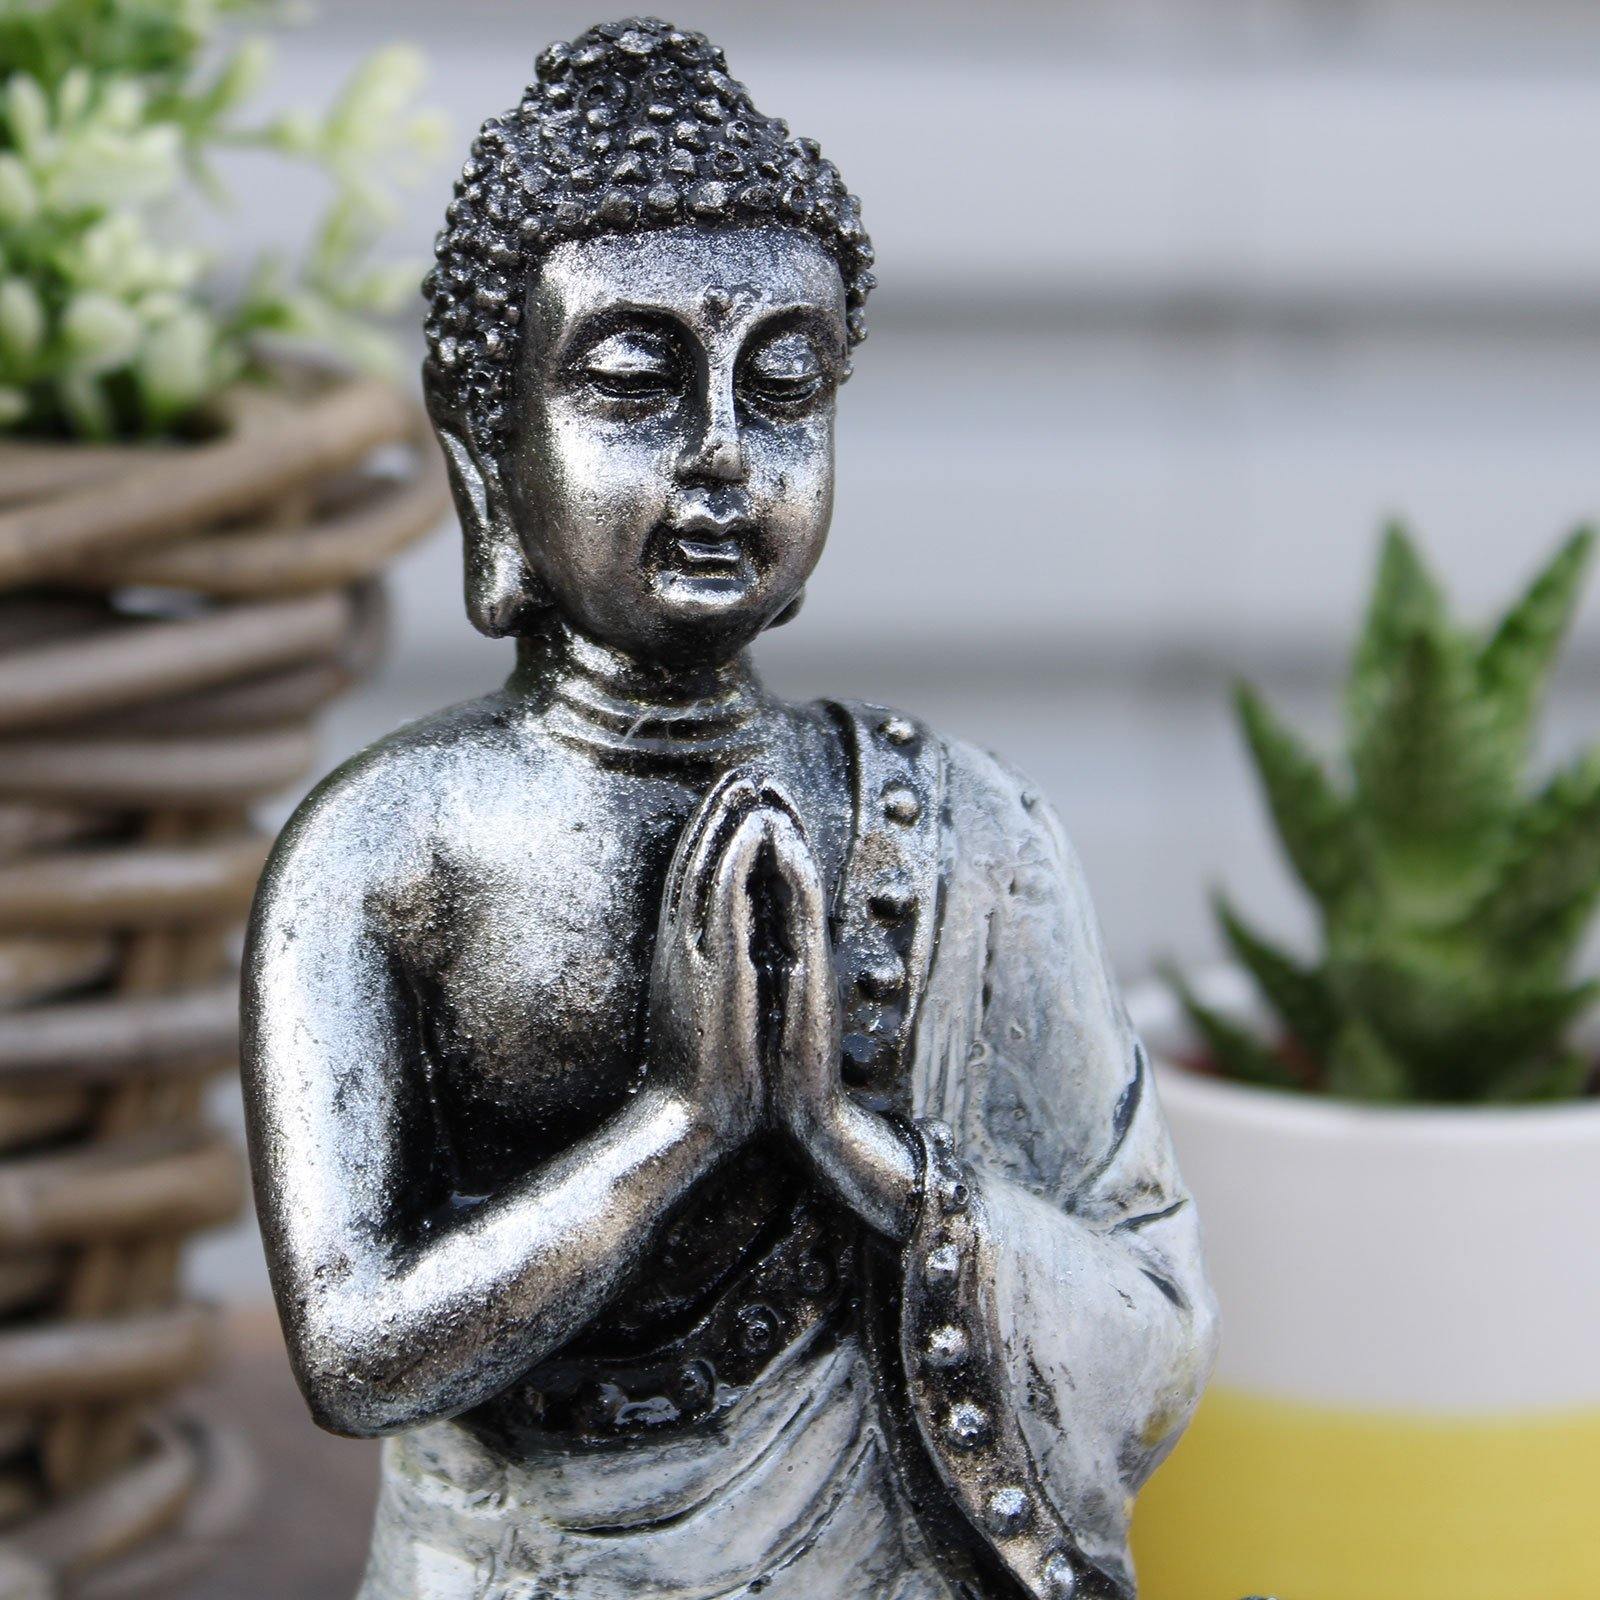 6 x Silver Mini Buddha Figure Handpainted Ornaments - Kporium Home & Garden